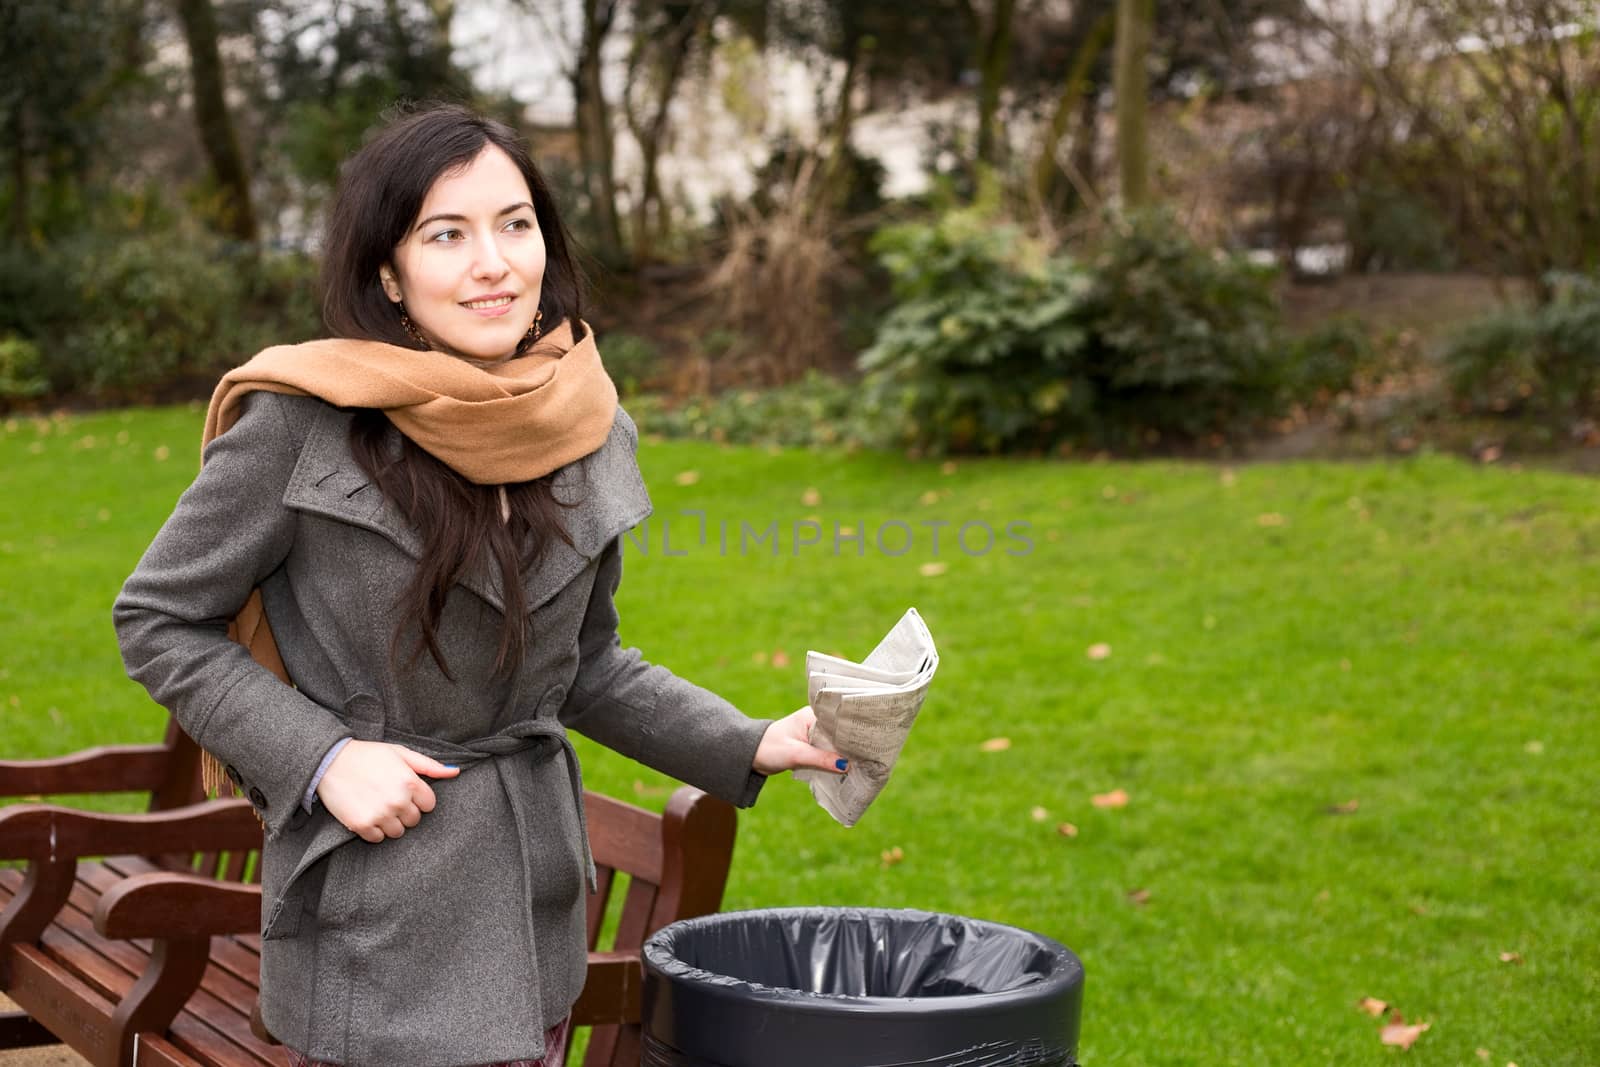 young woman throwing rubbish in a bin